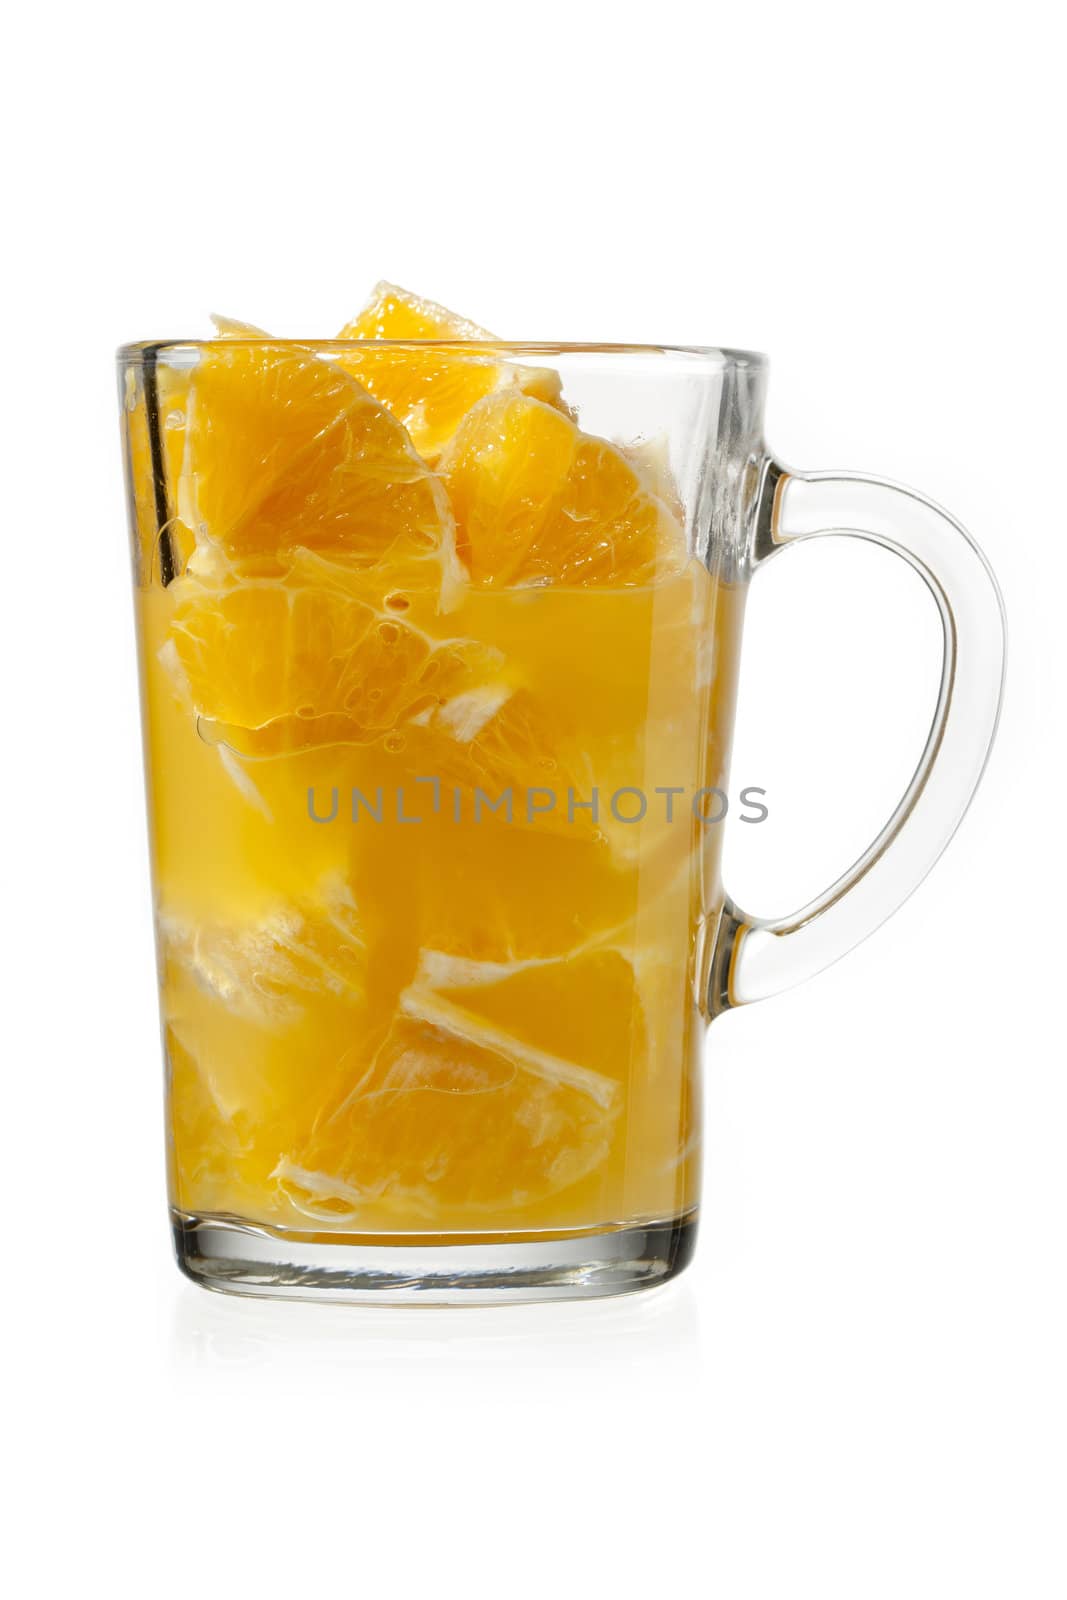 Glass of orange juice with pulp